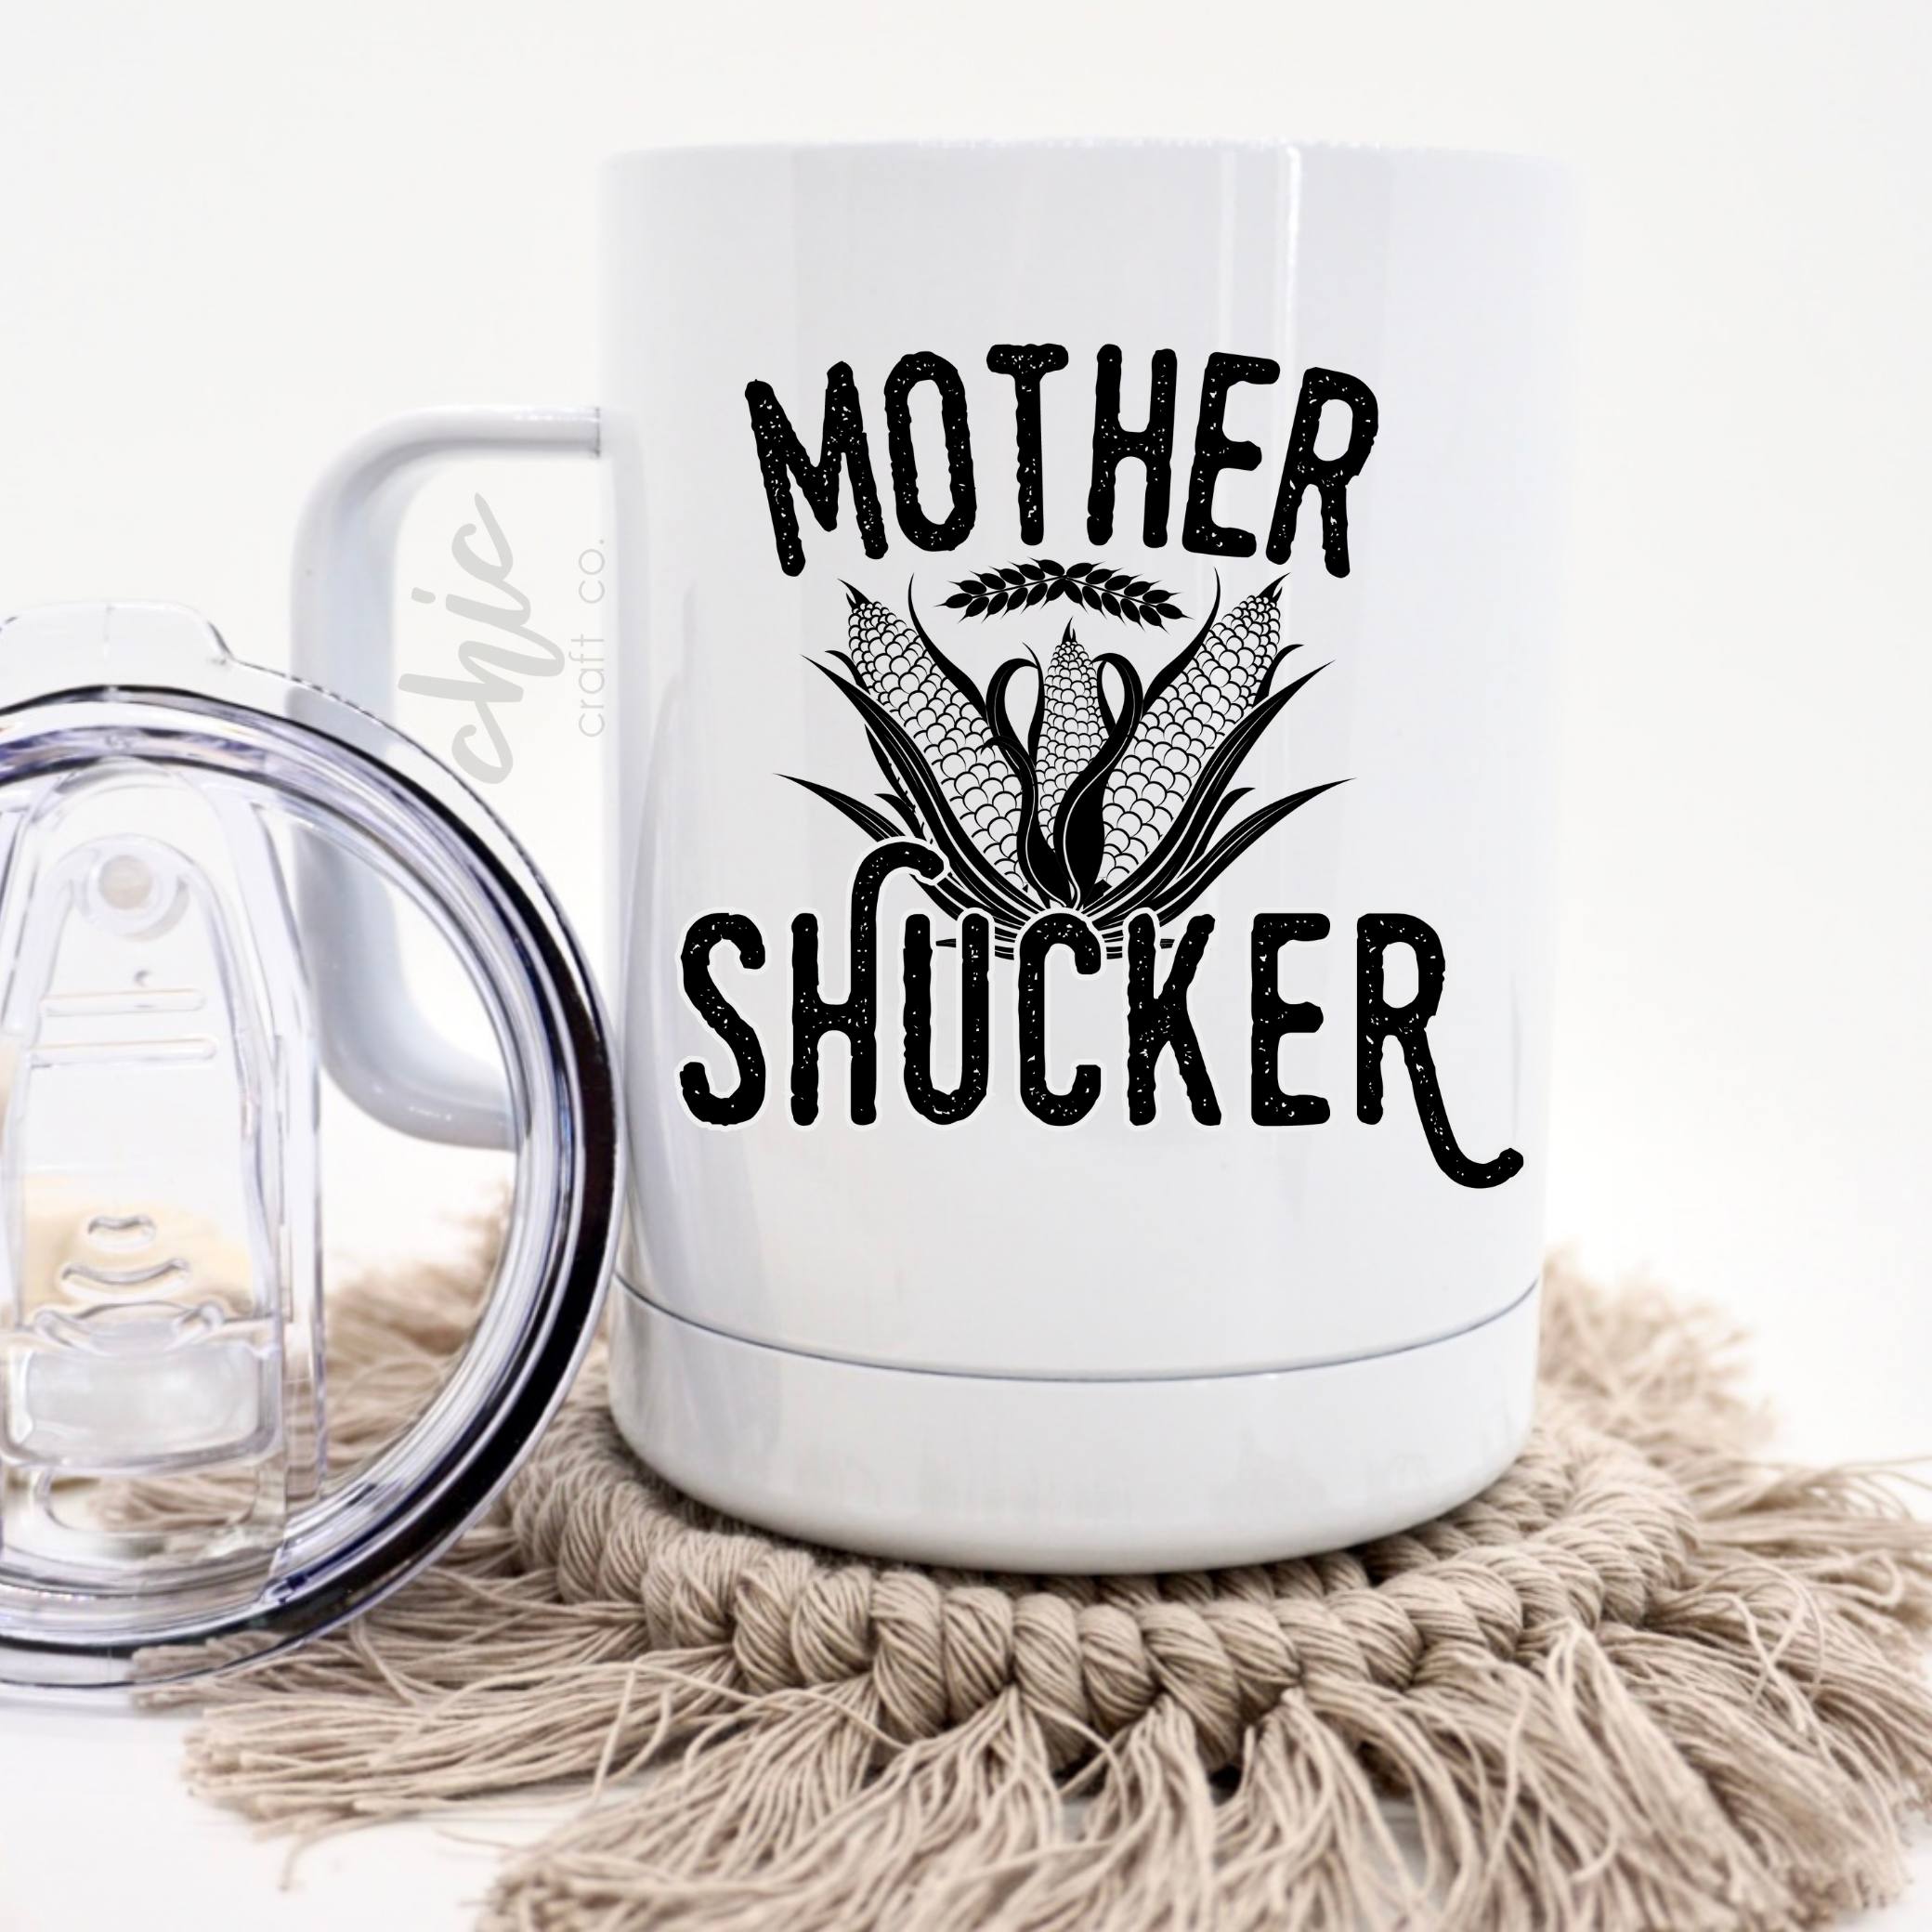 Mother Shucker